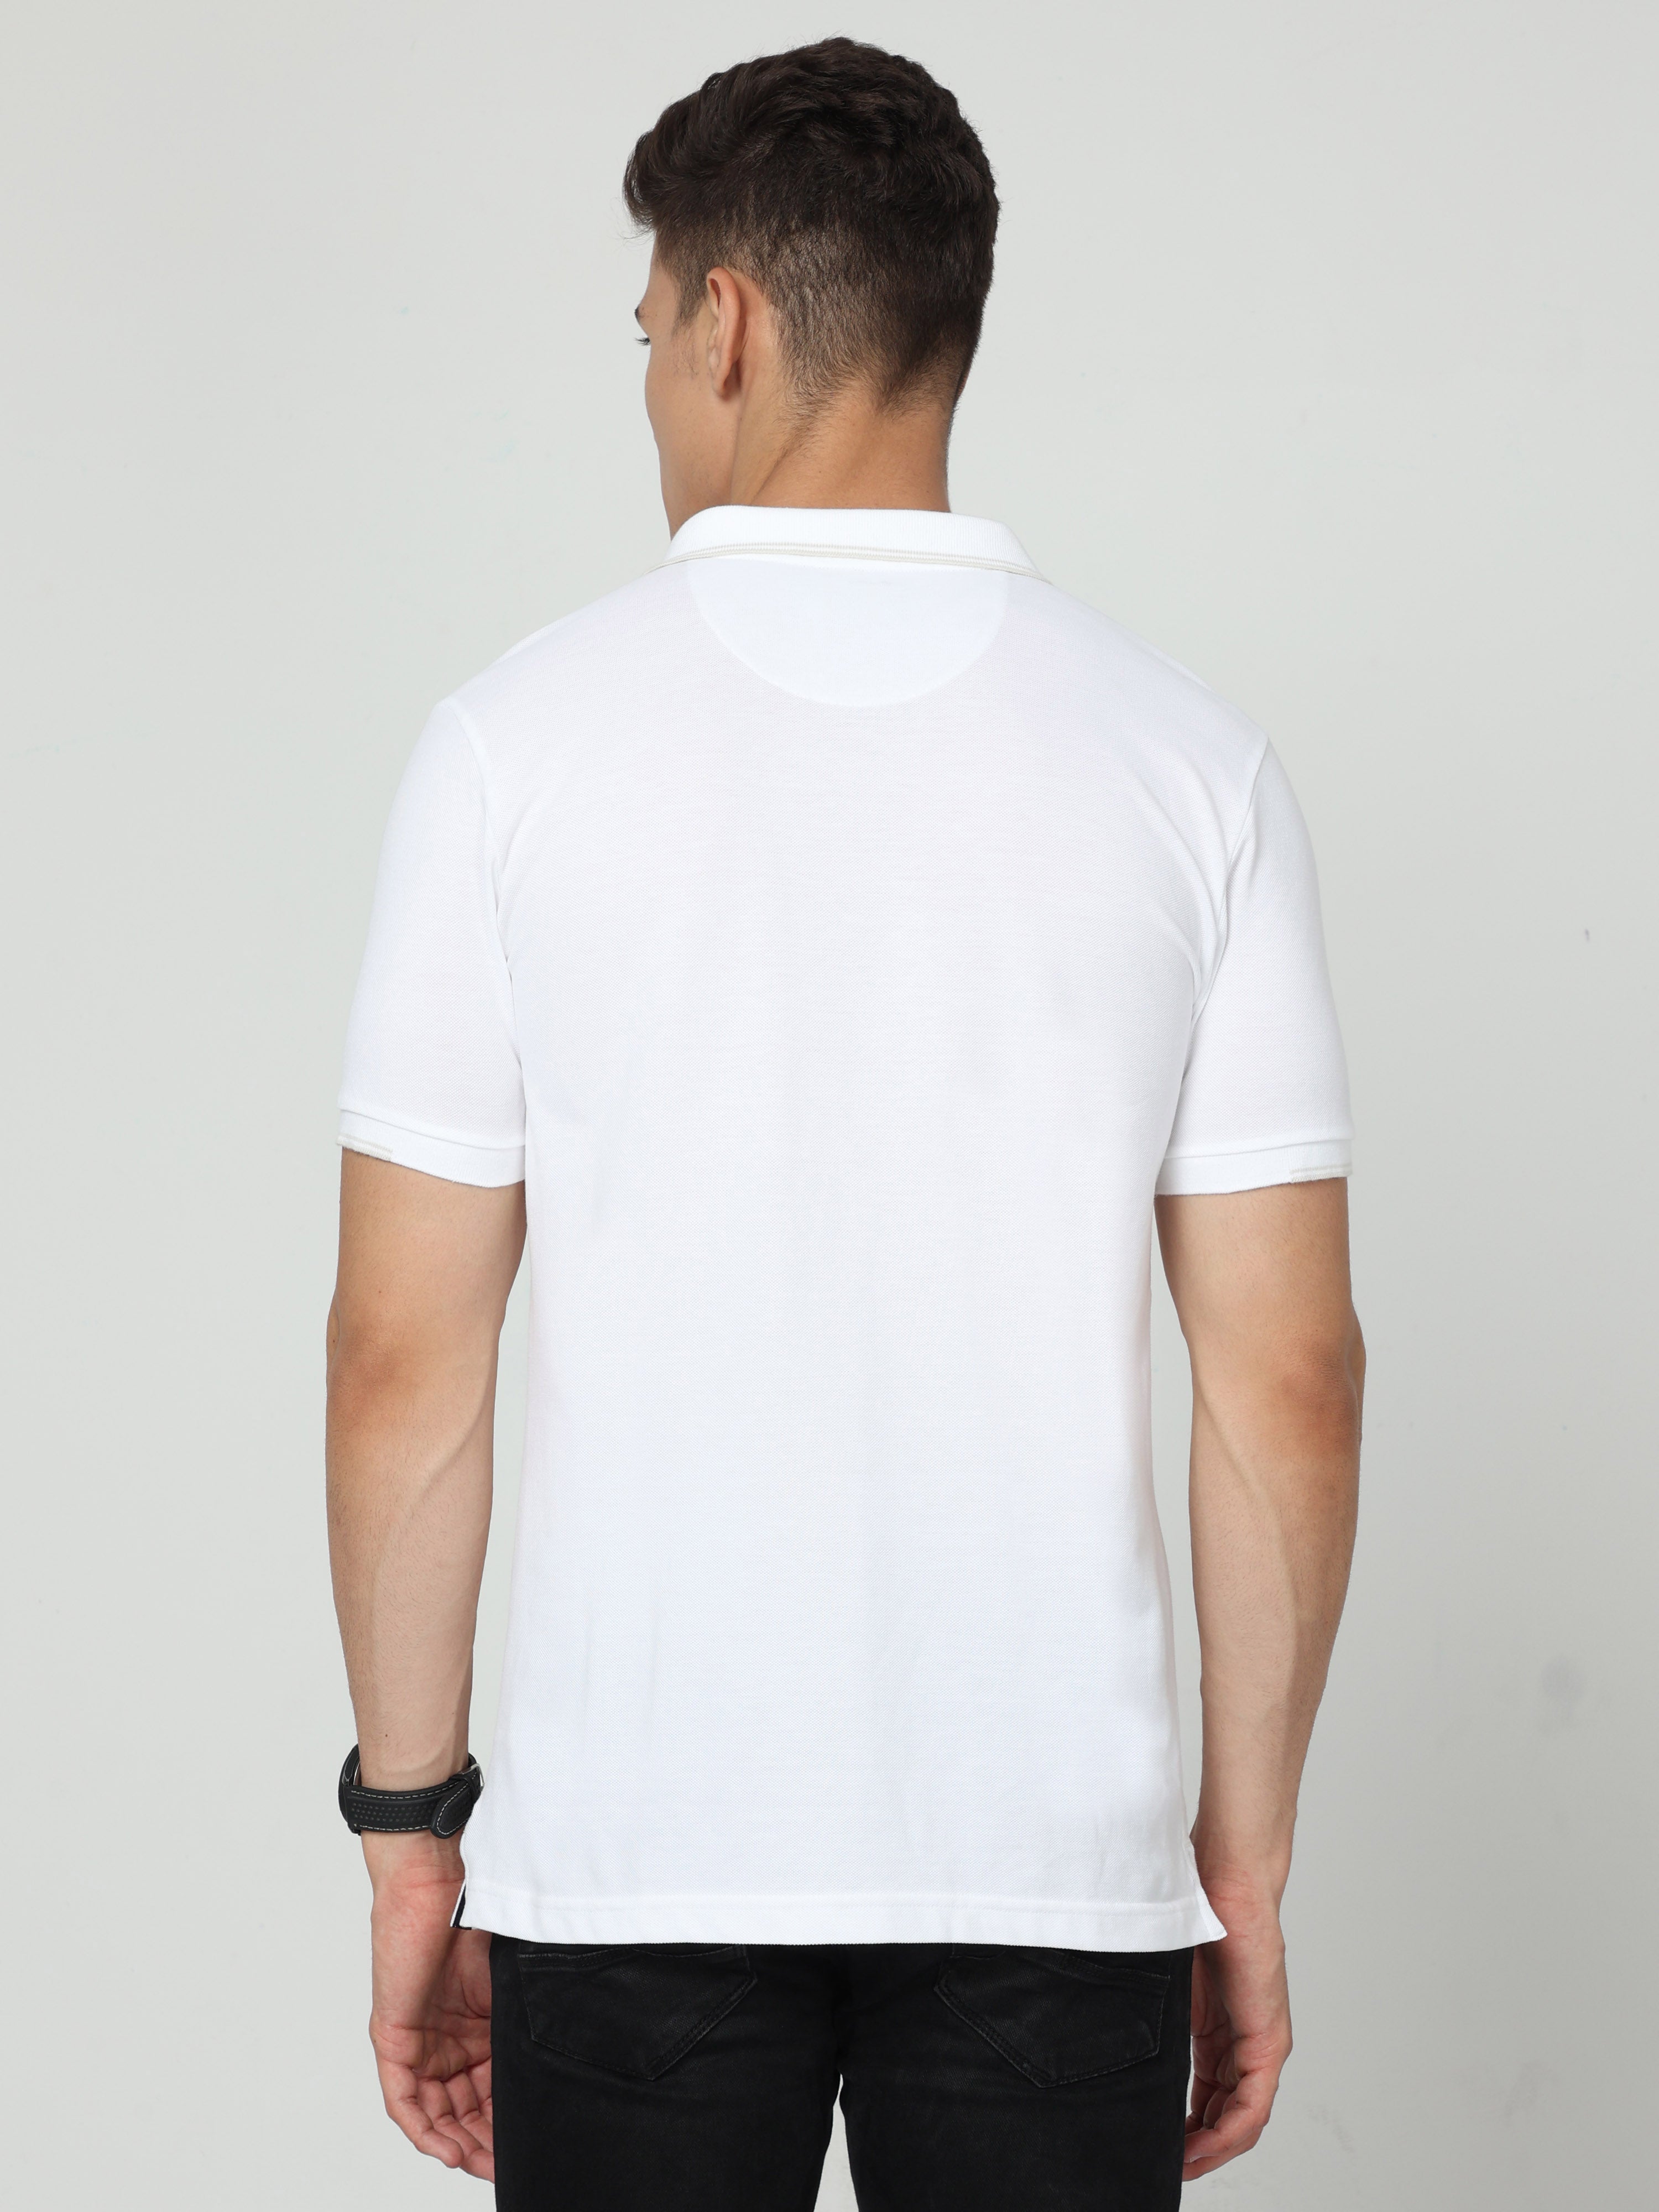 Classic Polo Mens Pure Cotton Half Sleeve Printed Slim Fit Polo Neck White Color T Shirt | Vivid Polo - 02 A